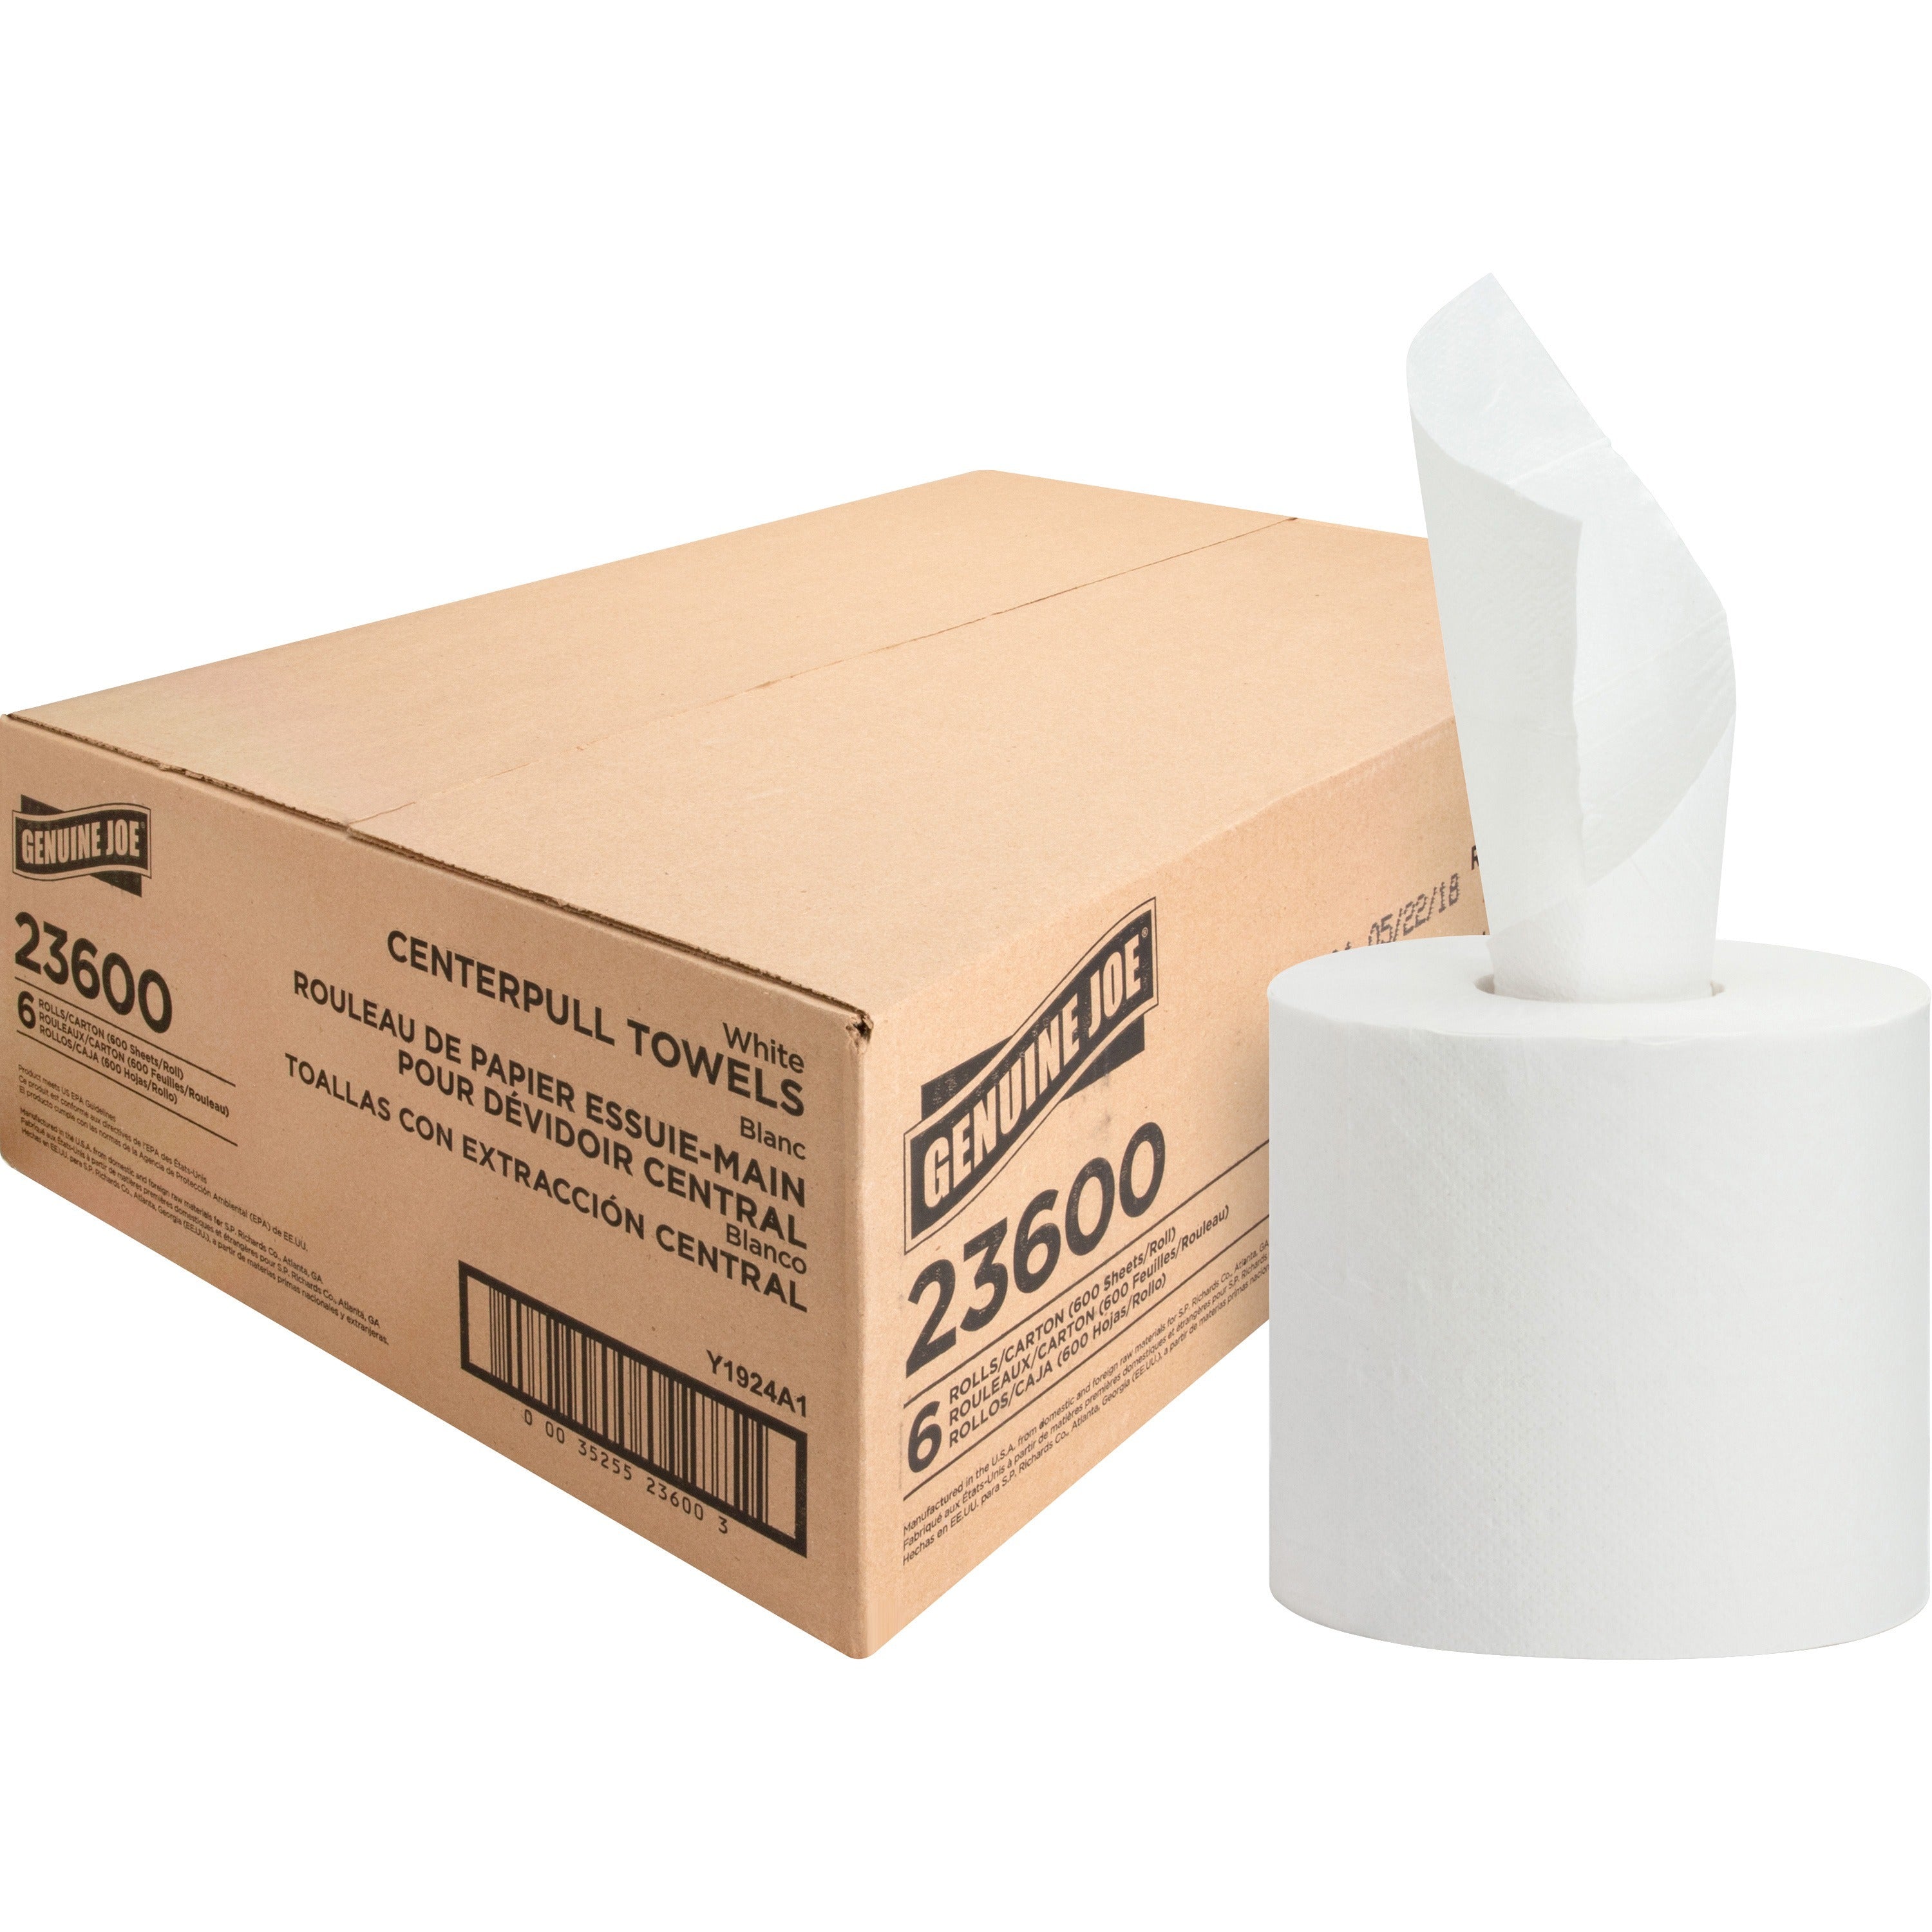 Genuine Joe Centerpull Paper Towels - 2 Ply - 600 Sheets/Roll - 3.02" Core - White - Fiber - Non-chlorine Bleached, Center Pull - For Washroom - 6 / Carton - 